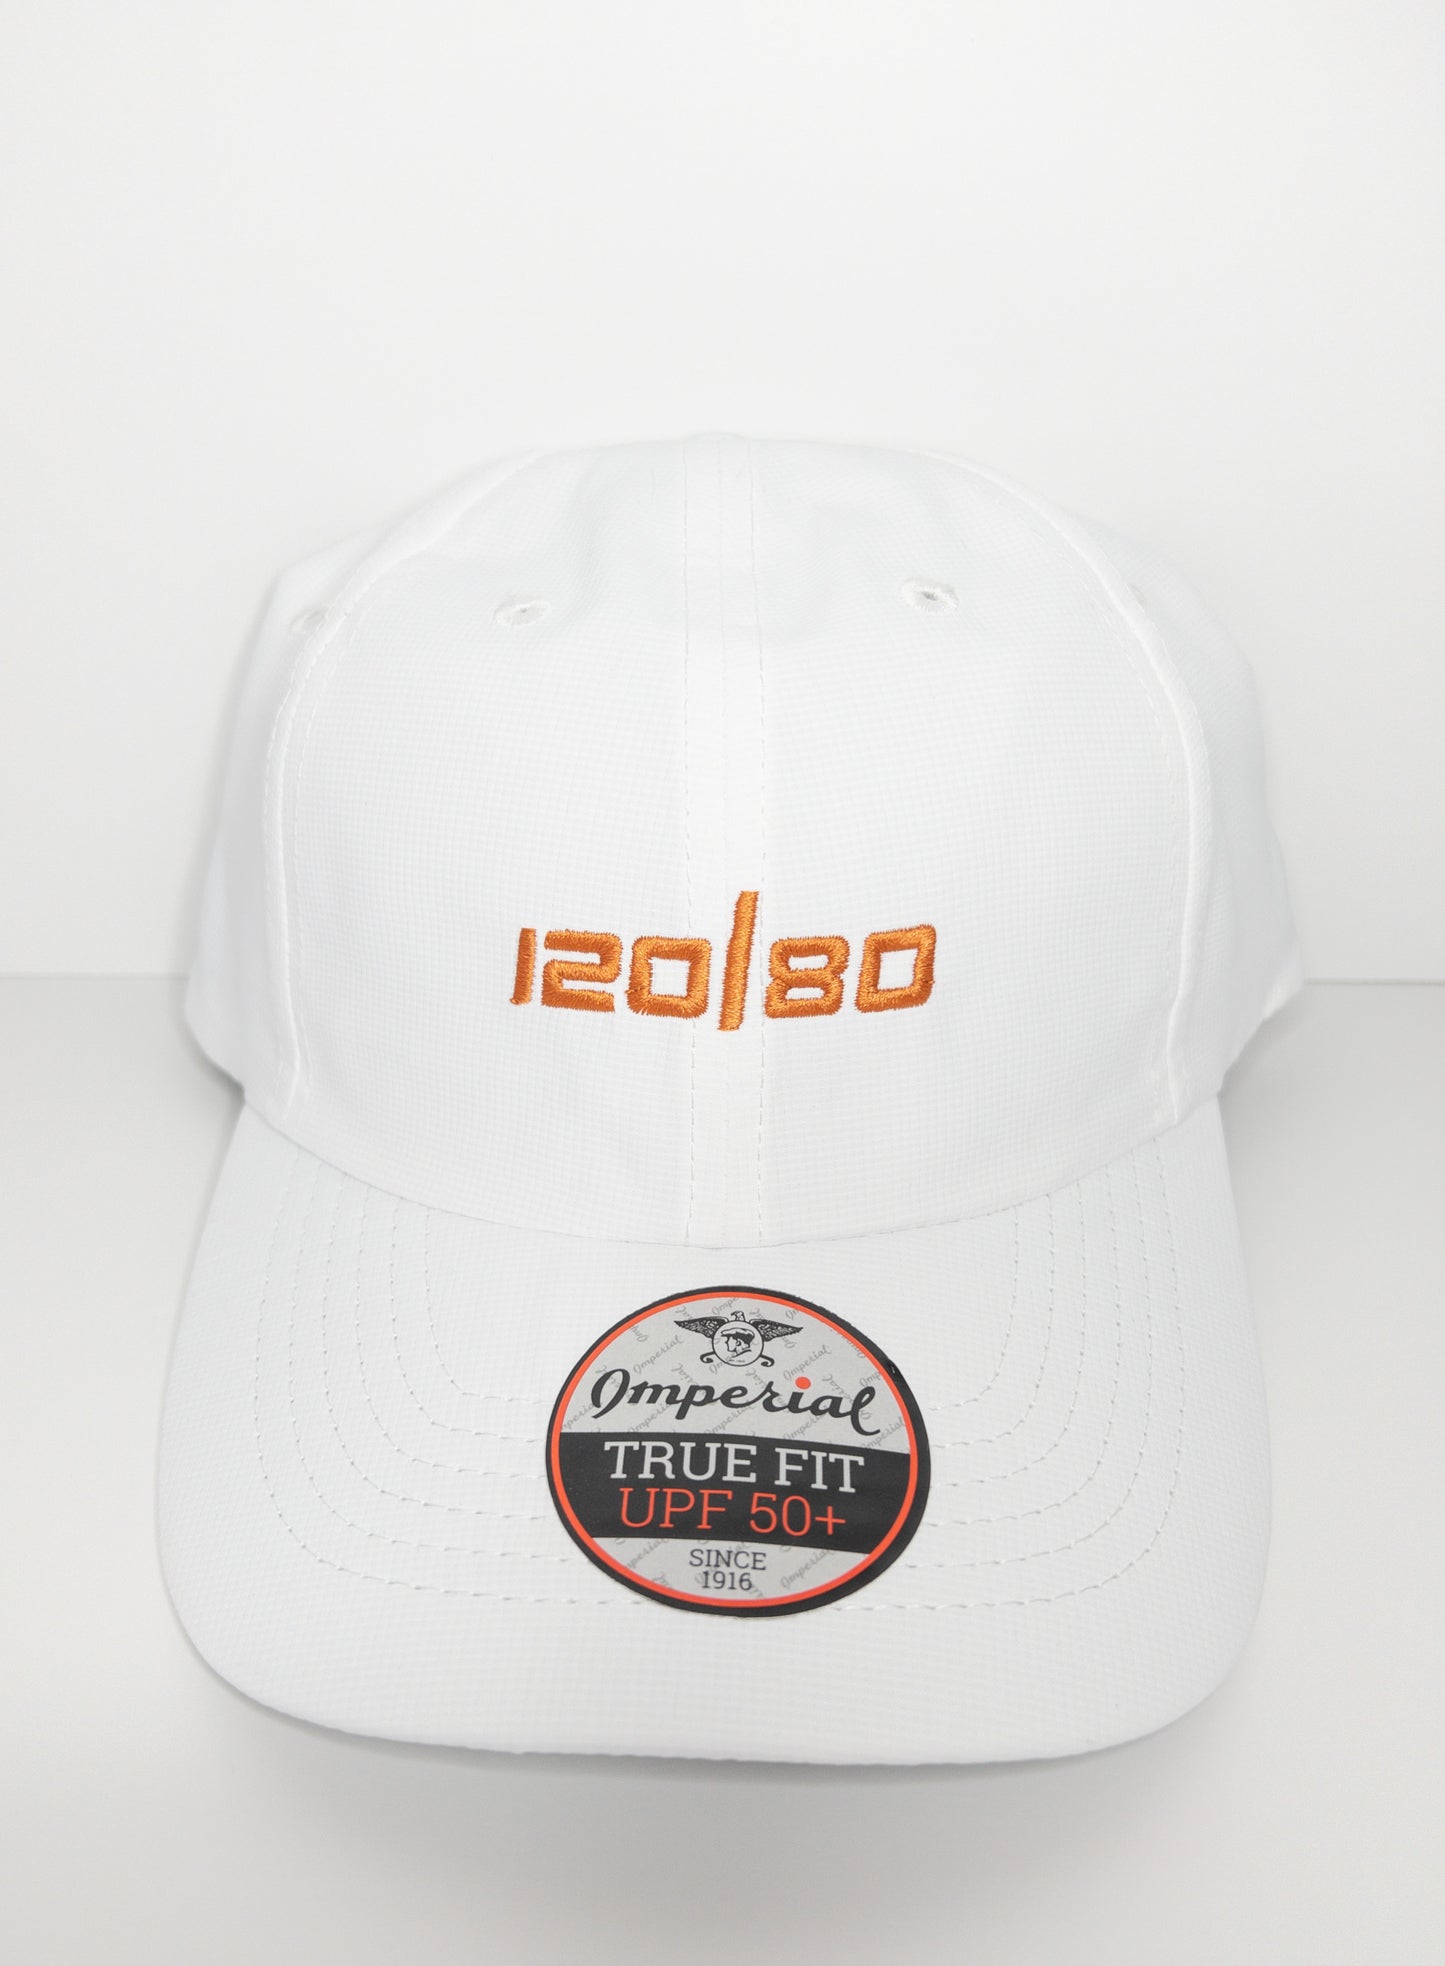 120/80 Performance Hat - White/Orange